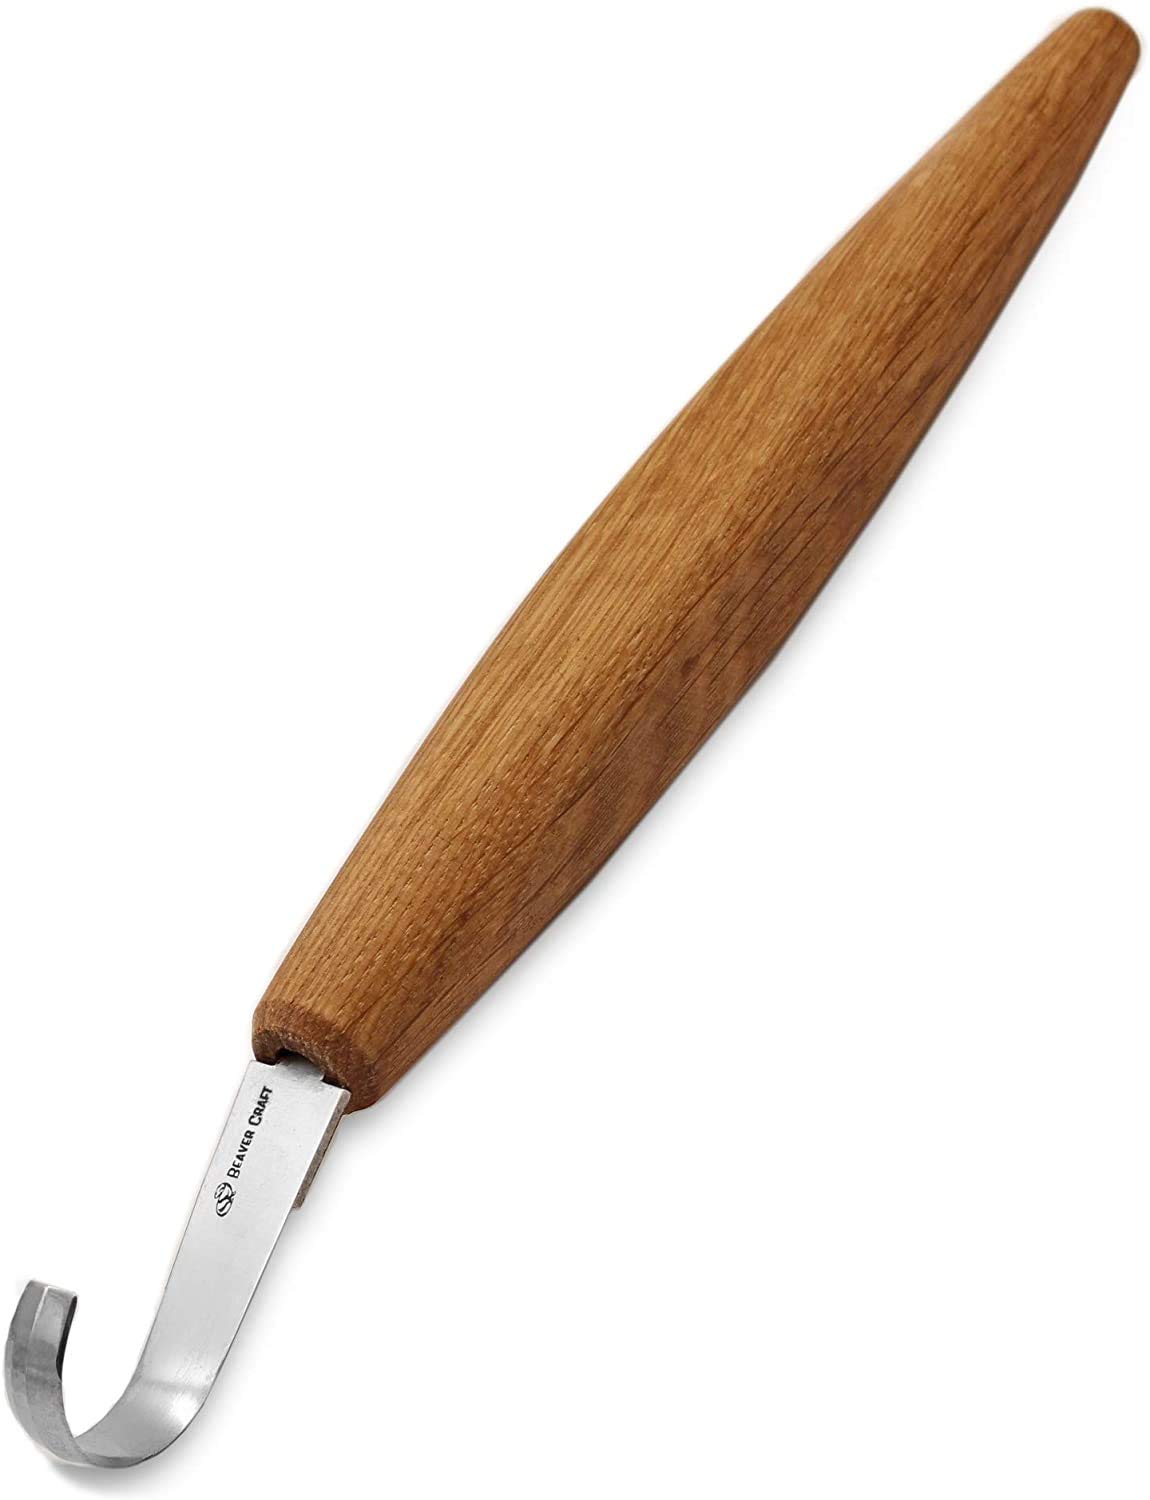 Easy DIY: A Knife Sheath Made from Balsa Wood